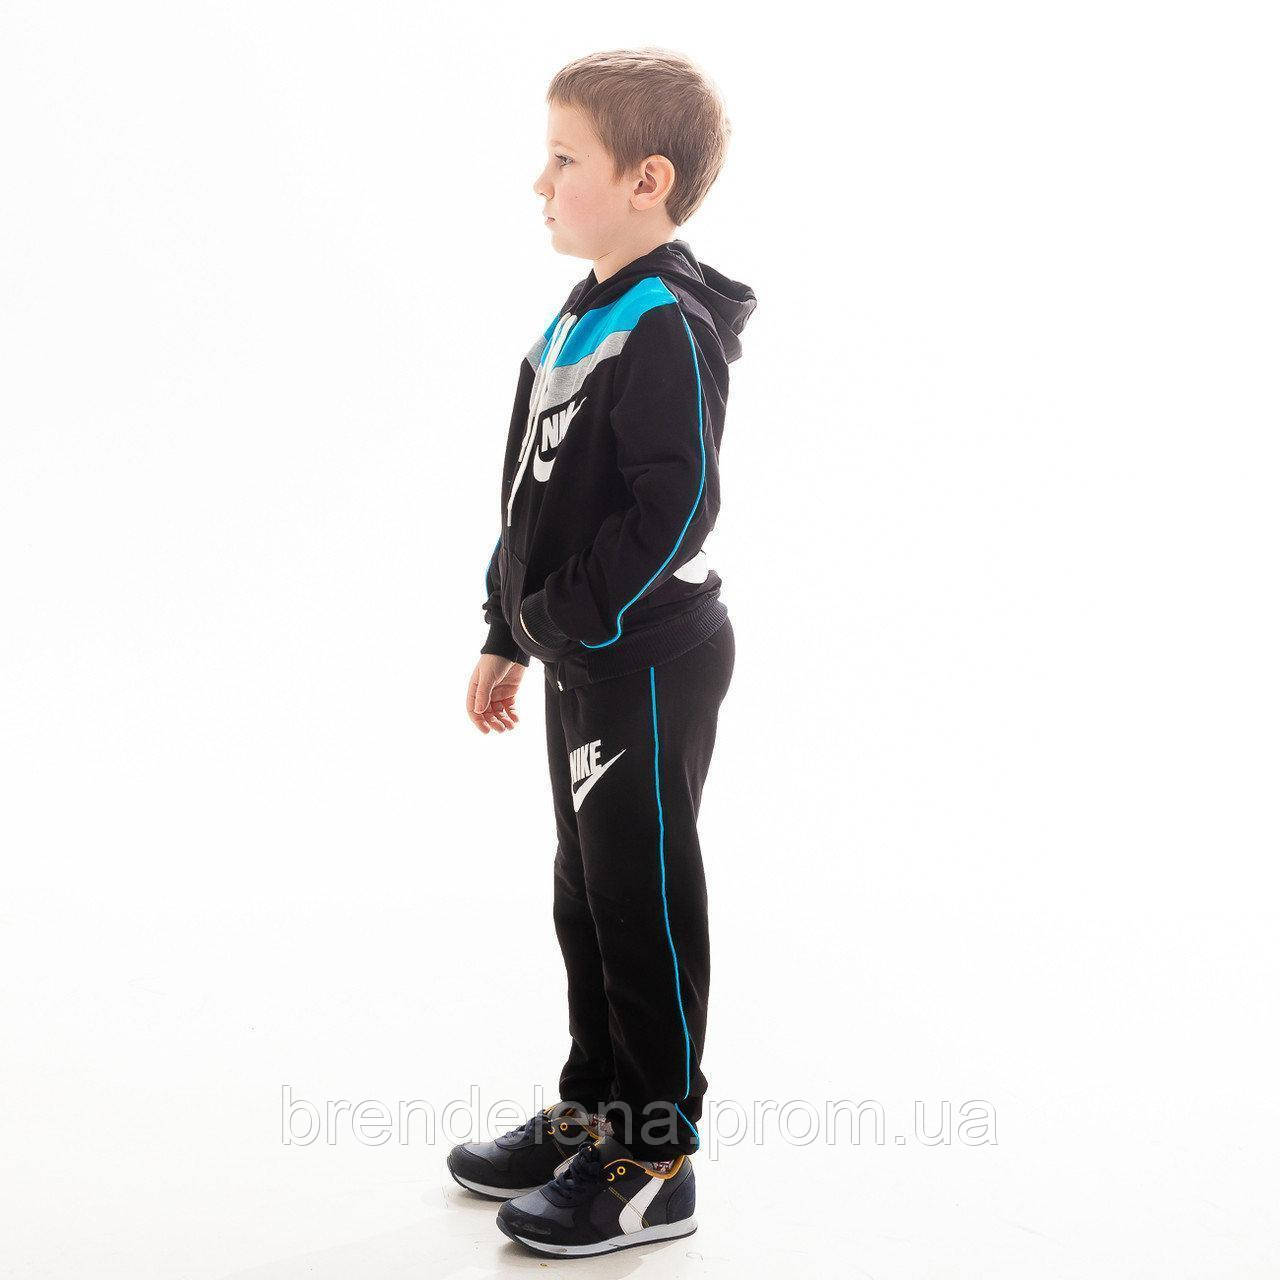 Спортивный костюм мальчику 10. Спортивный костюм для мальчика Nike ya76 tri bf Cuff Wu LK 14782884. Спортивный костюм найк для мальчика. Спортивный костюм для мальчика 12 лет. Спортивный костюм для подростка мальчика.